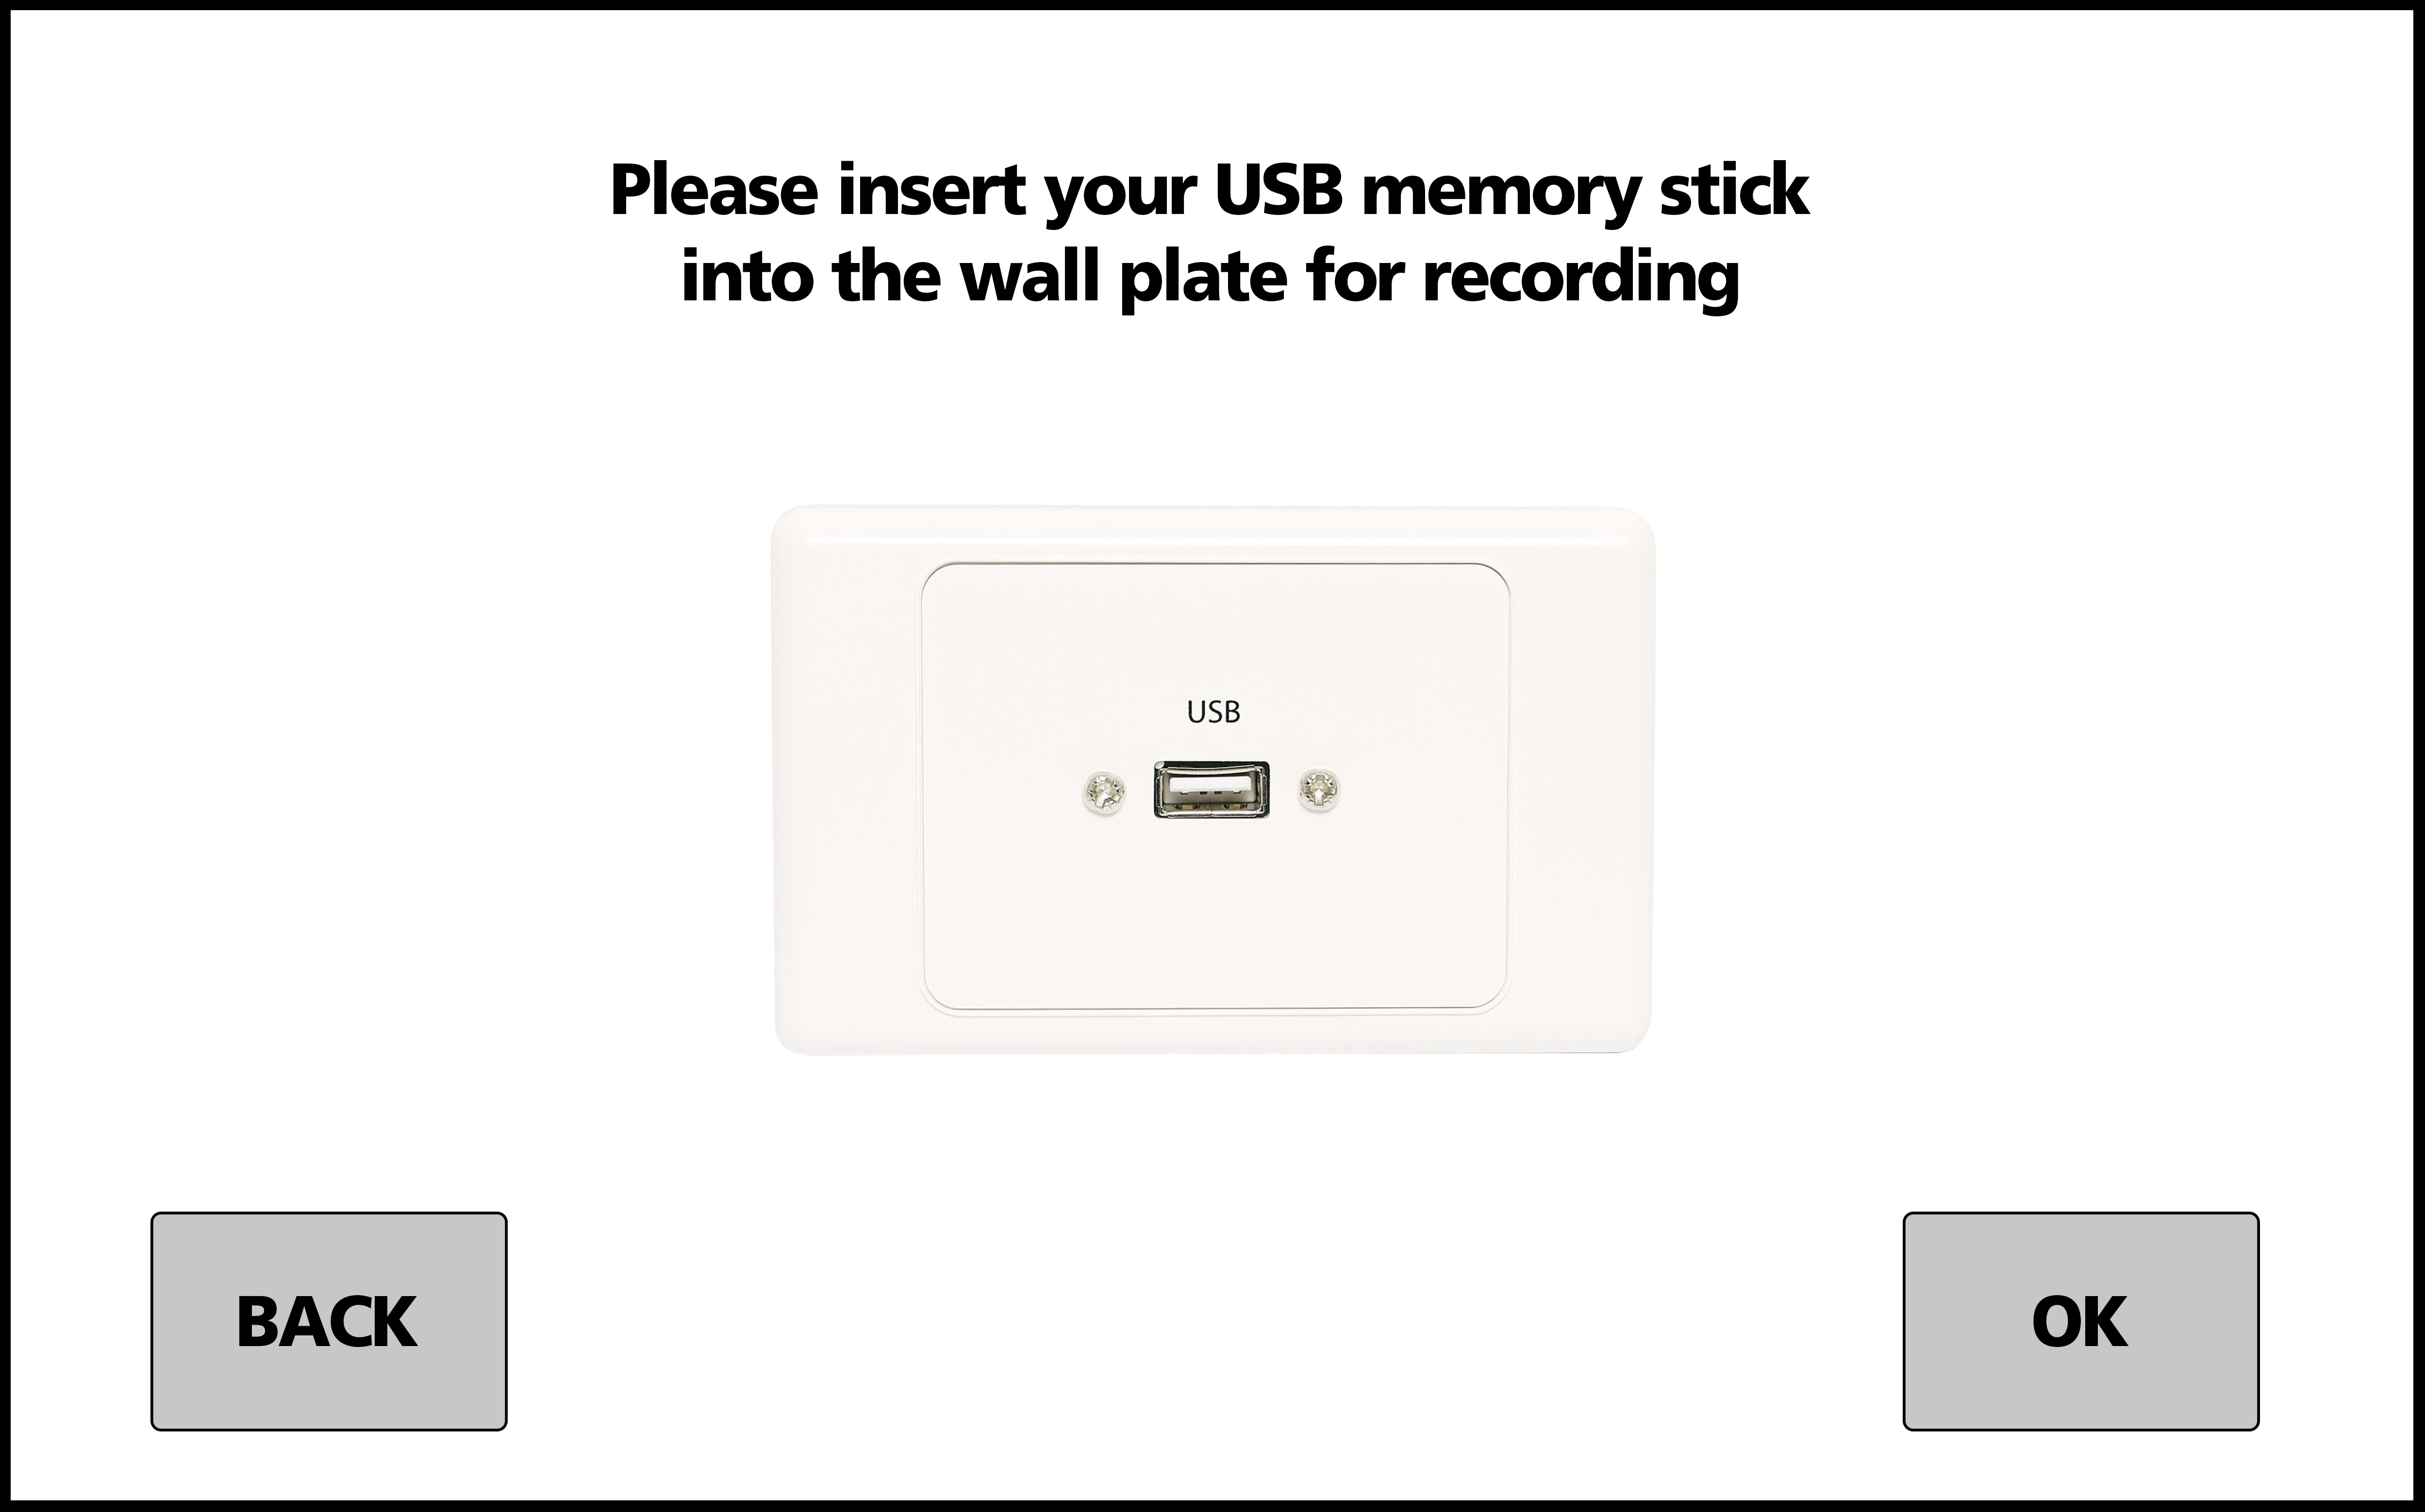 AV Touch Panel from Green Screen Room - USB memory stick screen